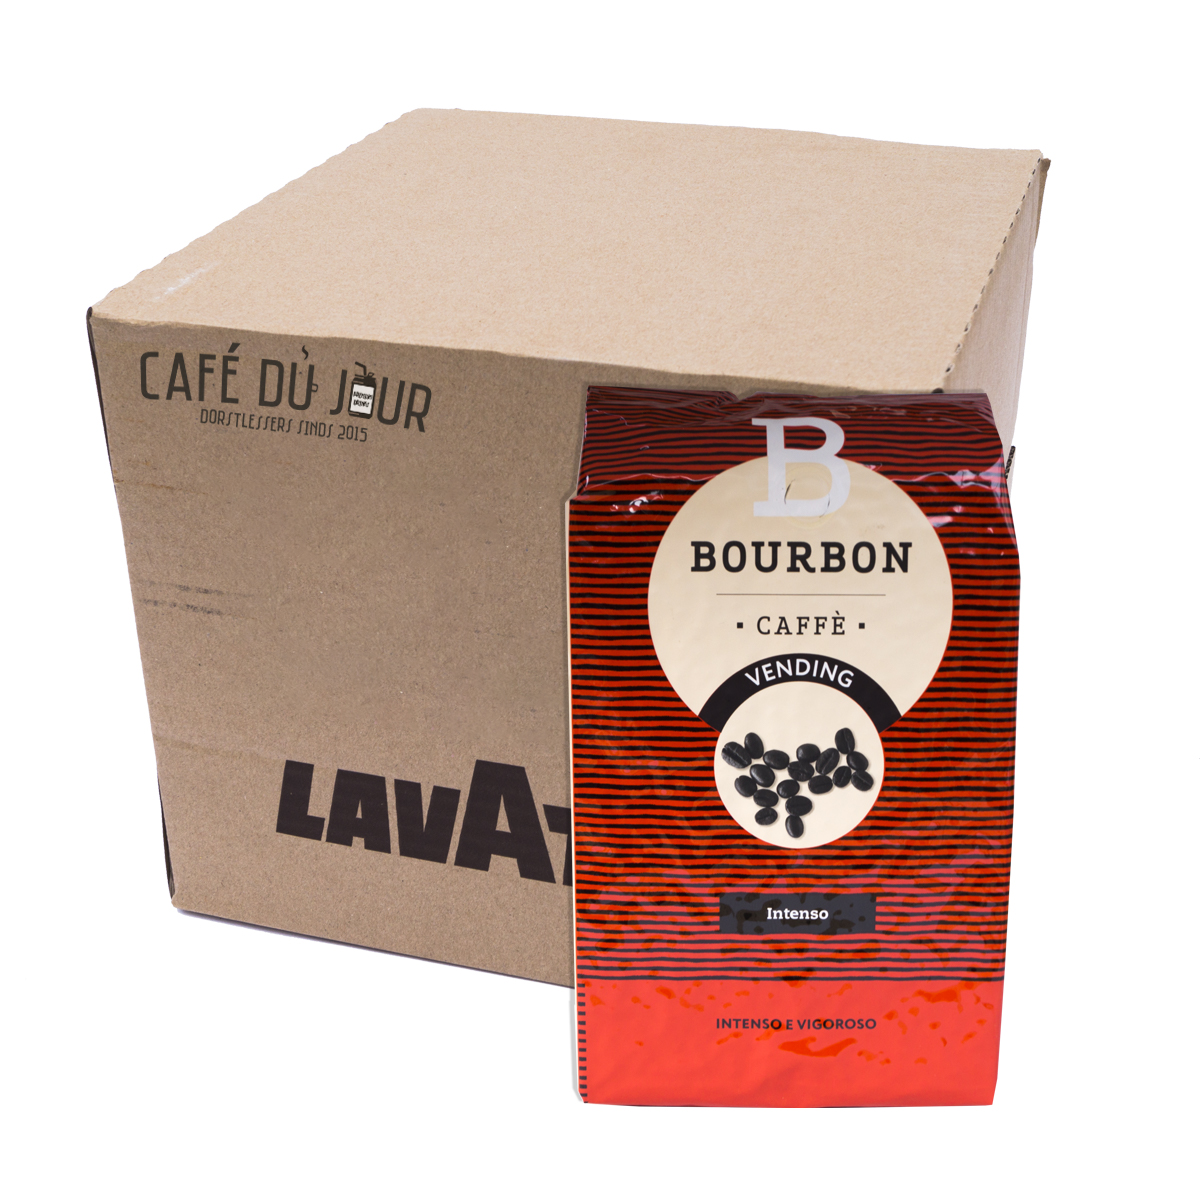 Lavazza Bourbon Vending Intenso 6 kg koffiebonen